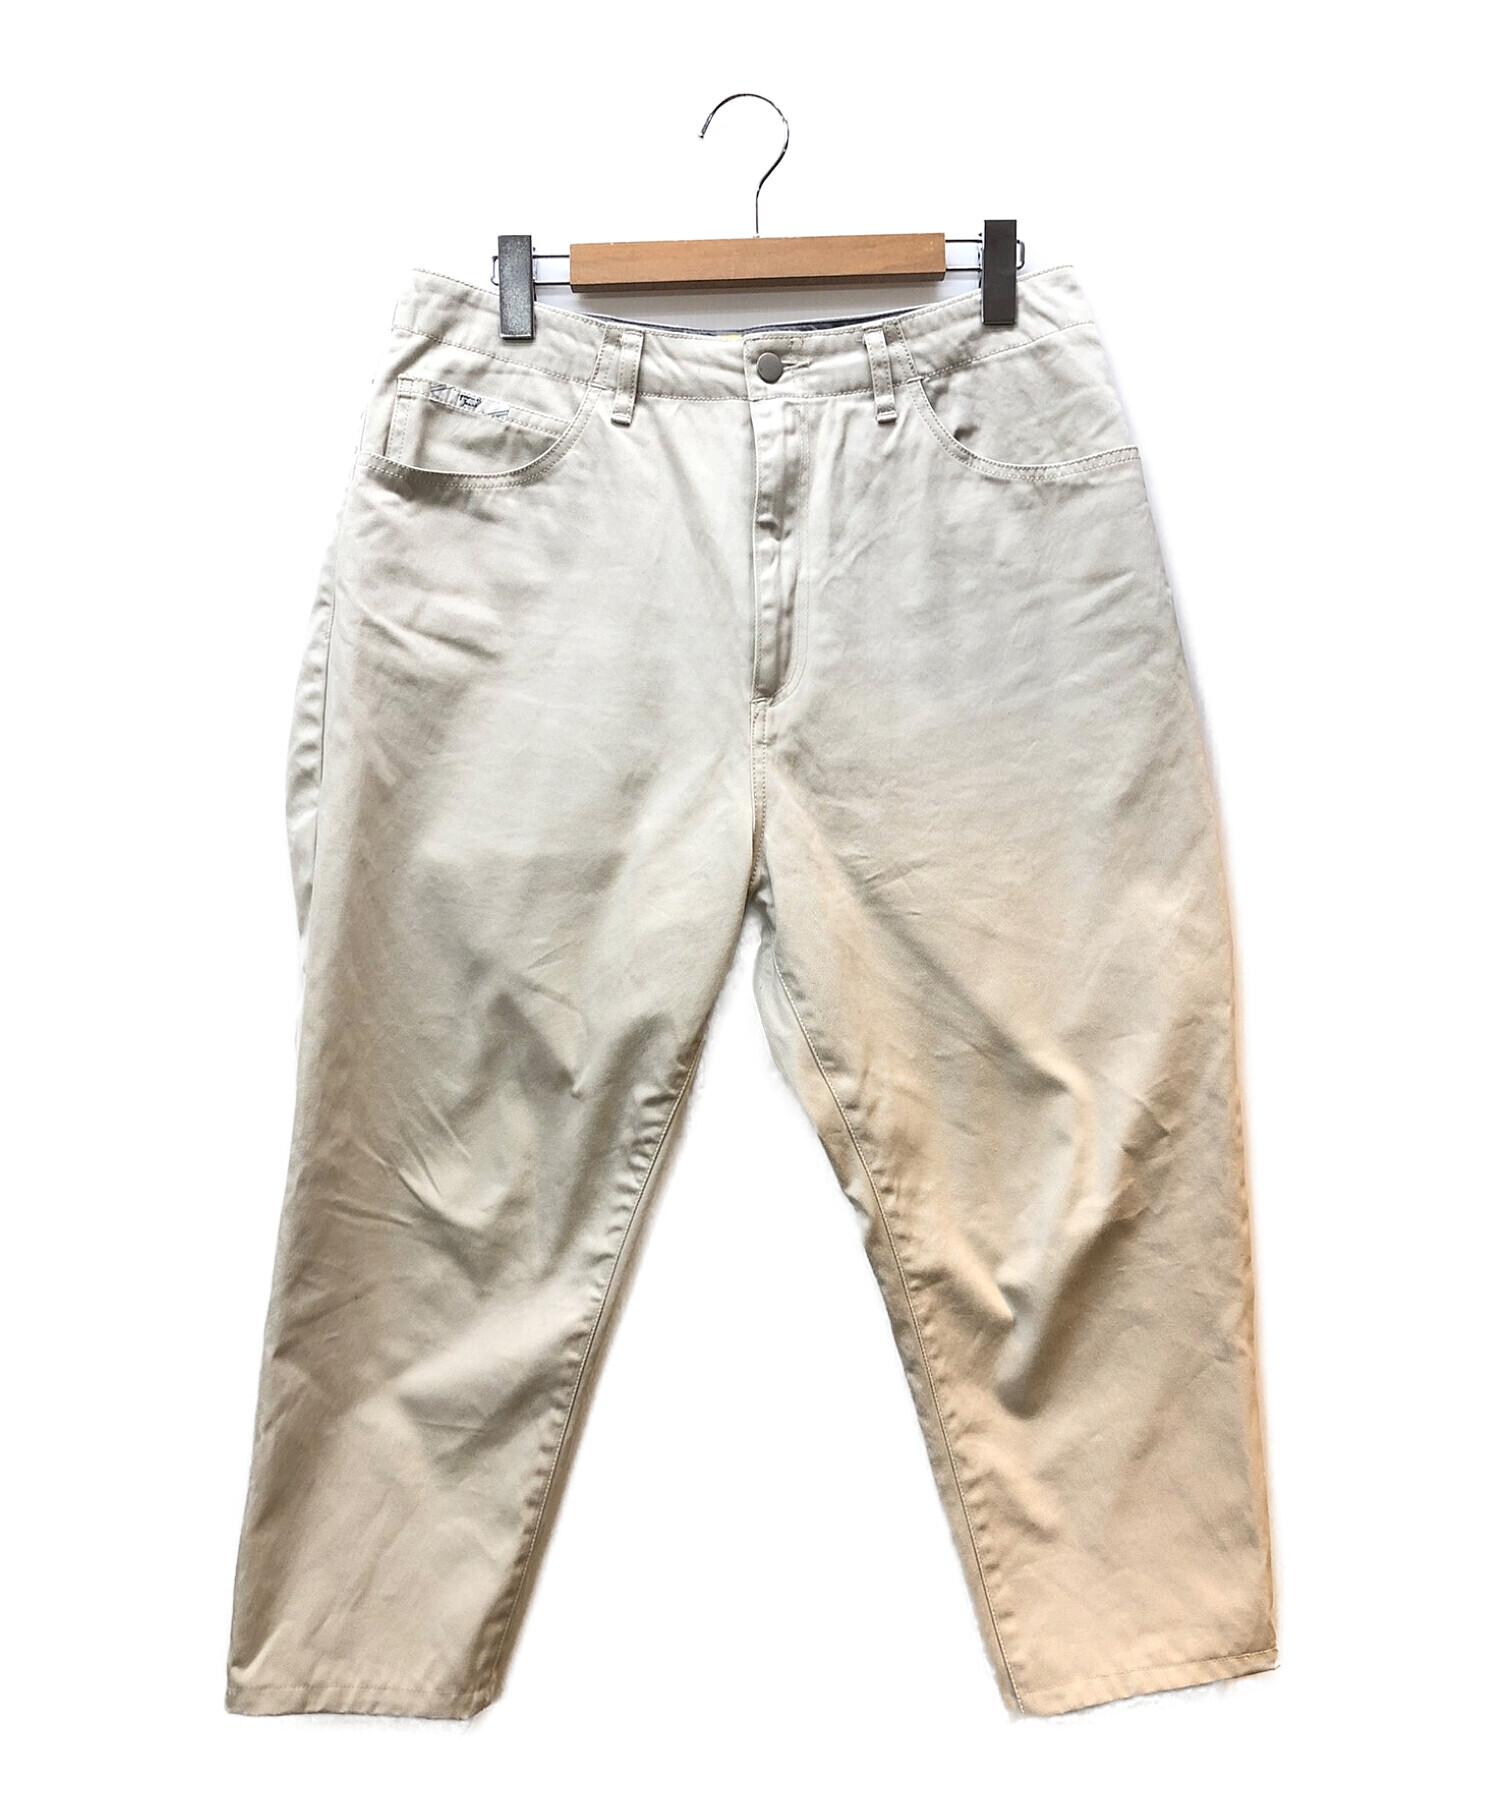 gourmet jeans   TYPE 03 – LEAN / IVORY